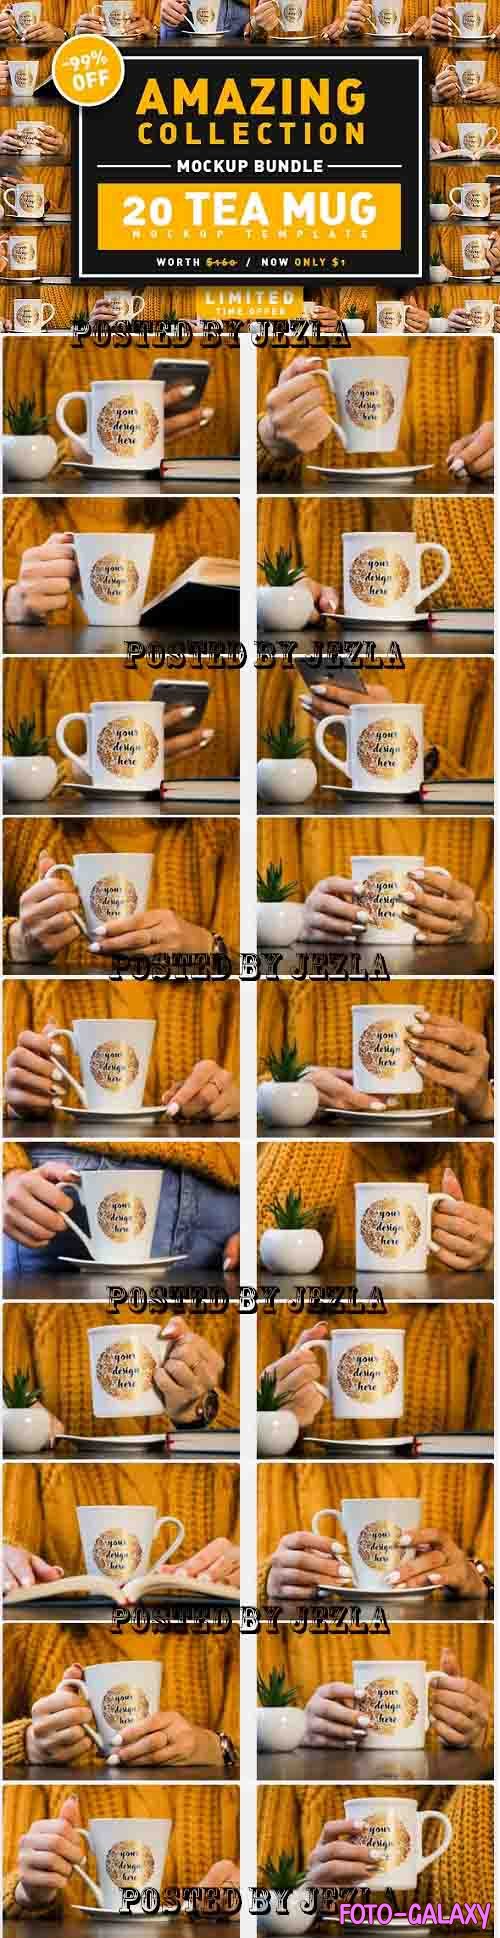 Tea Mug Mockup Bundle - 20 Premium Graphics